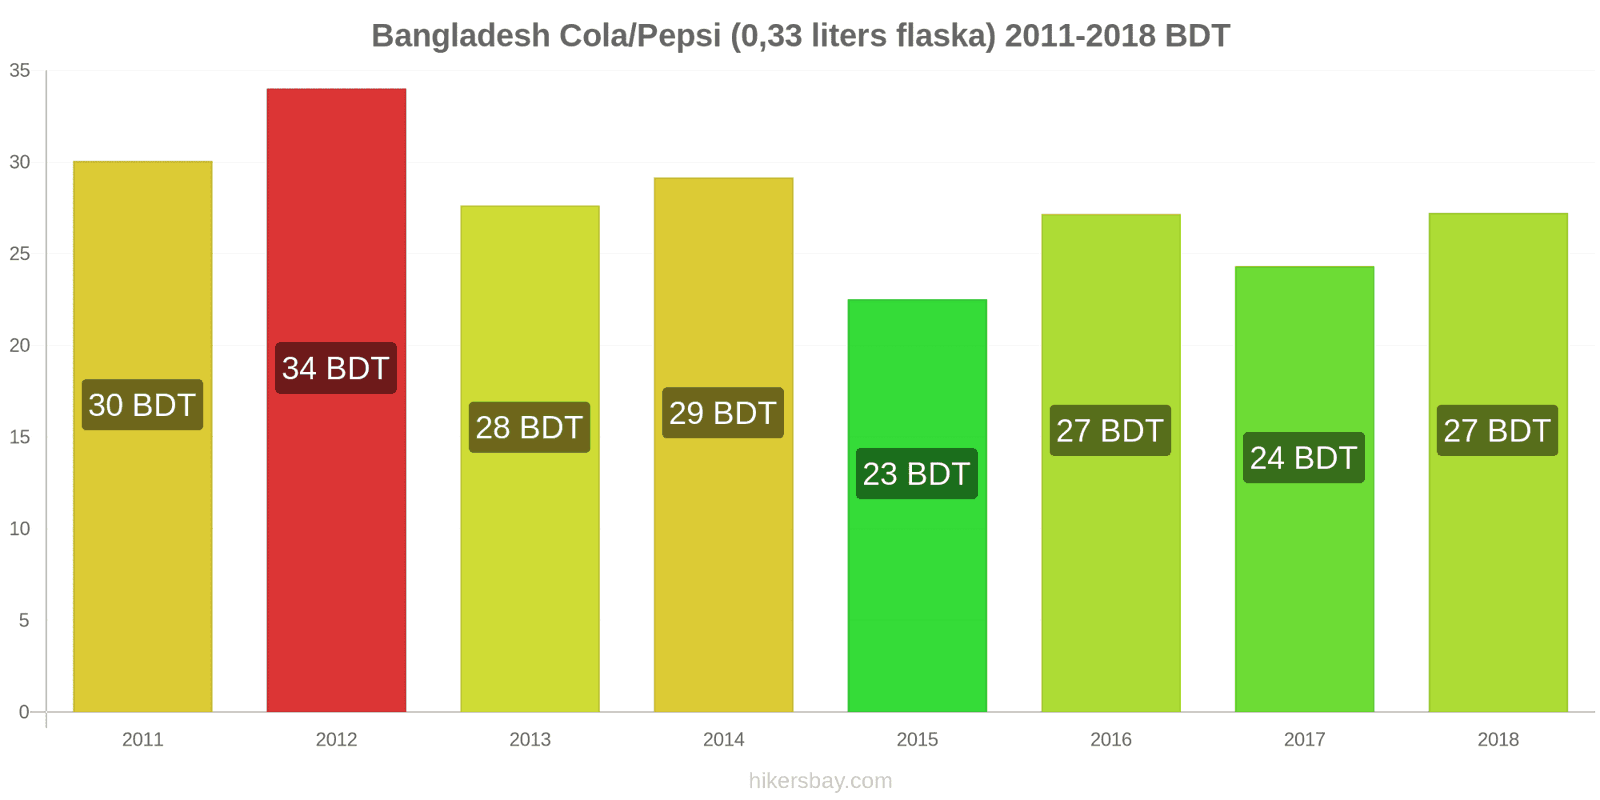 Bangladesh prisändringar Coca-Cola/Pepsi (0.33 liters flaska) hikersbay.com